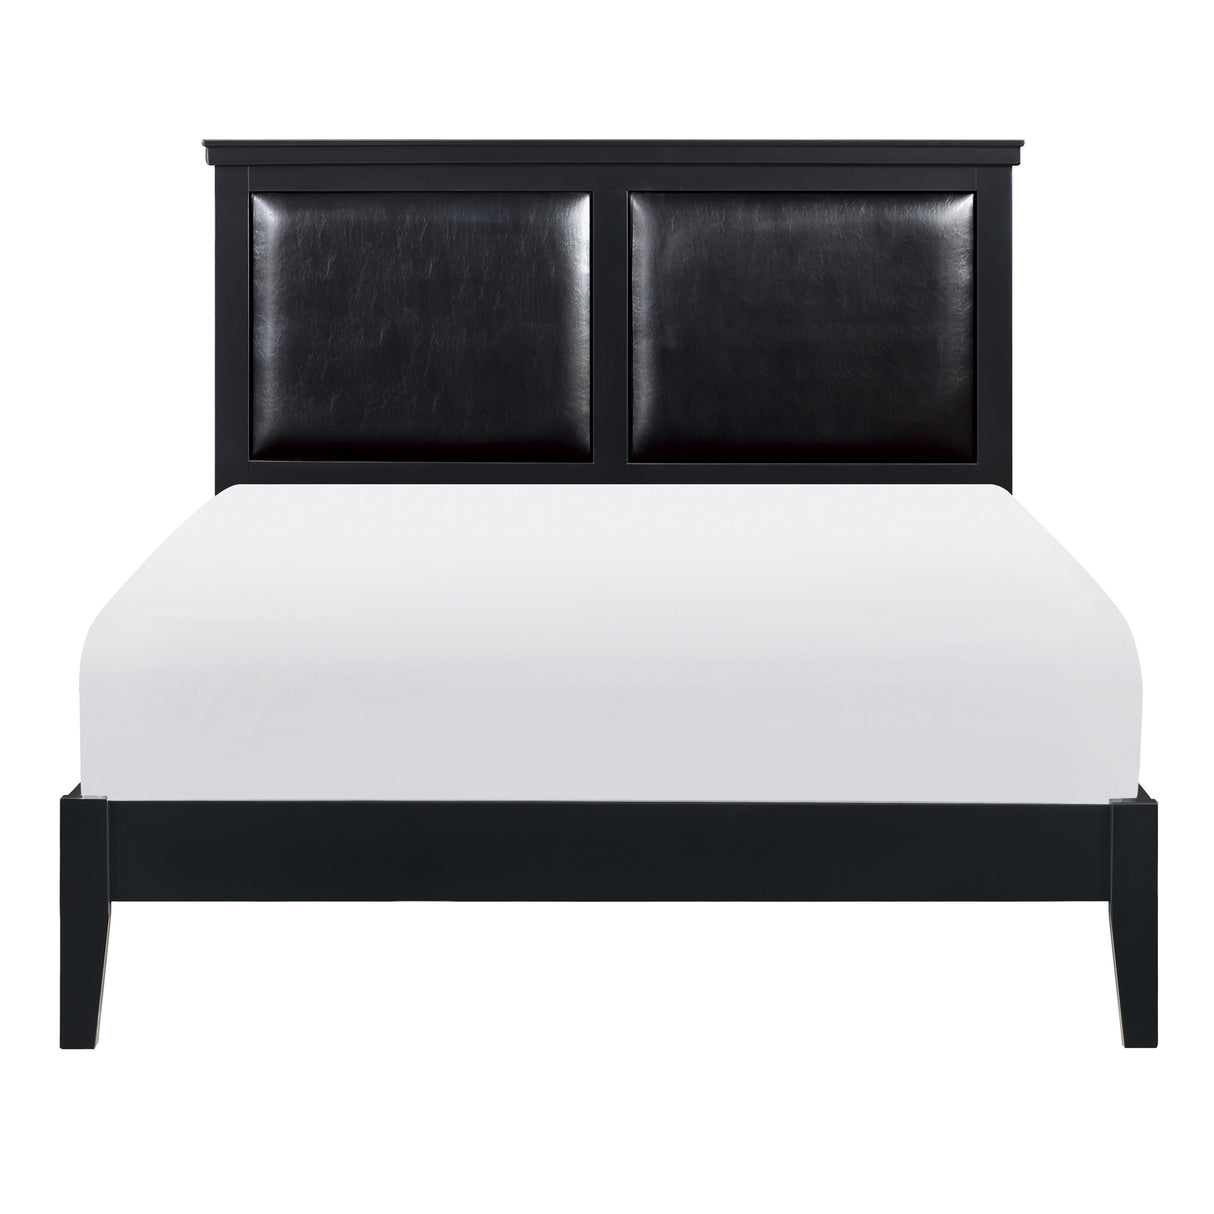 Seabright Black King Panel Bed - Luna Furniture